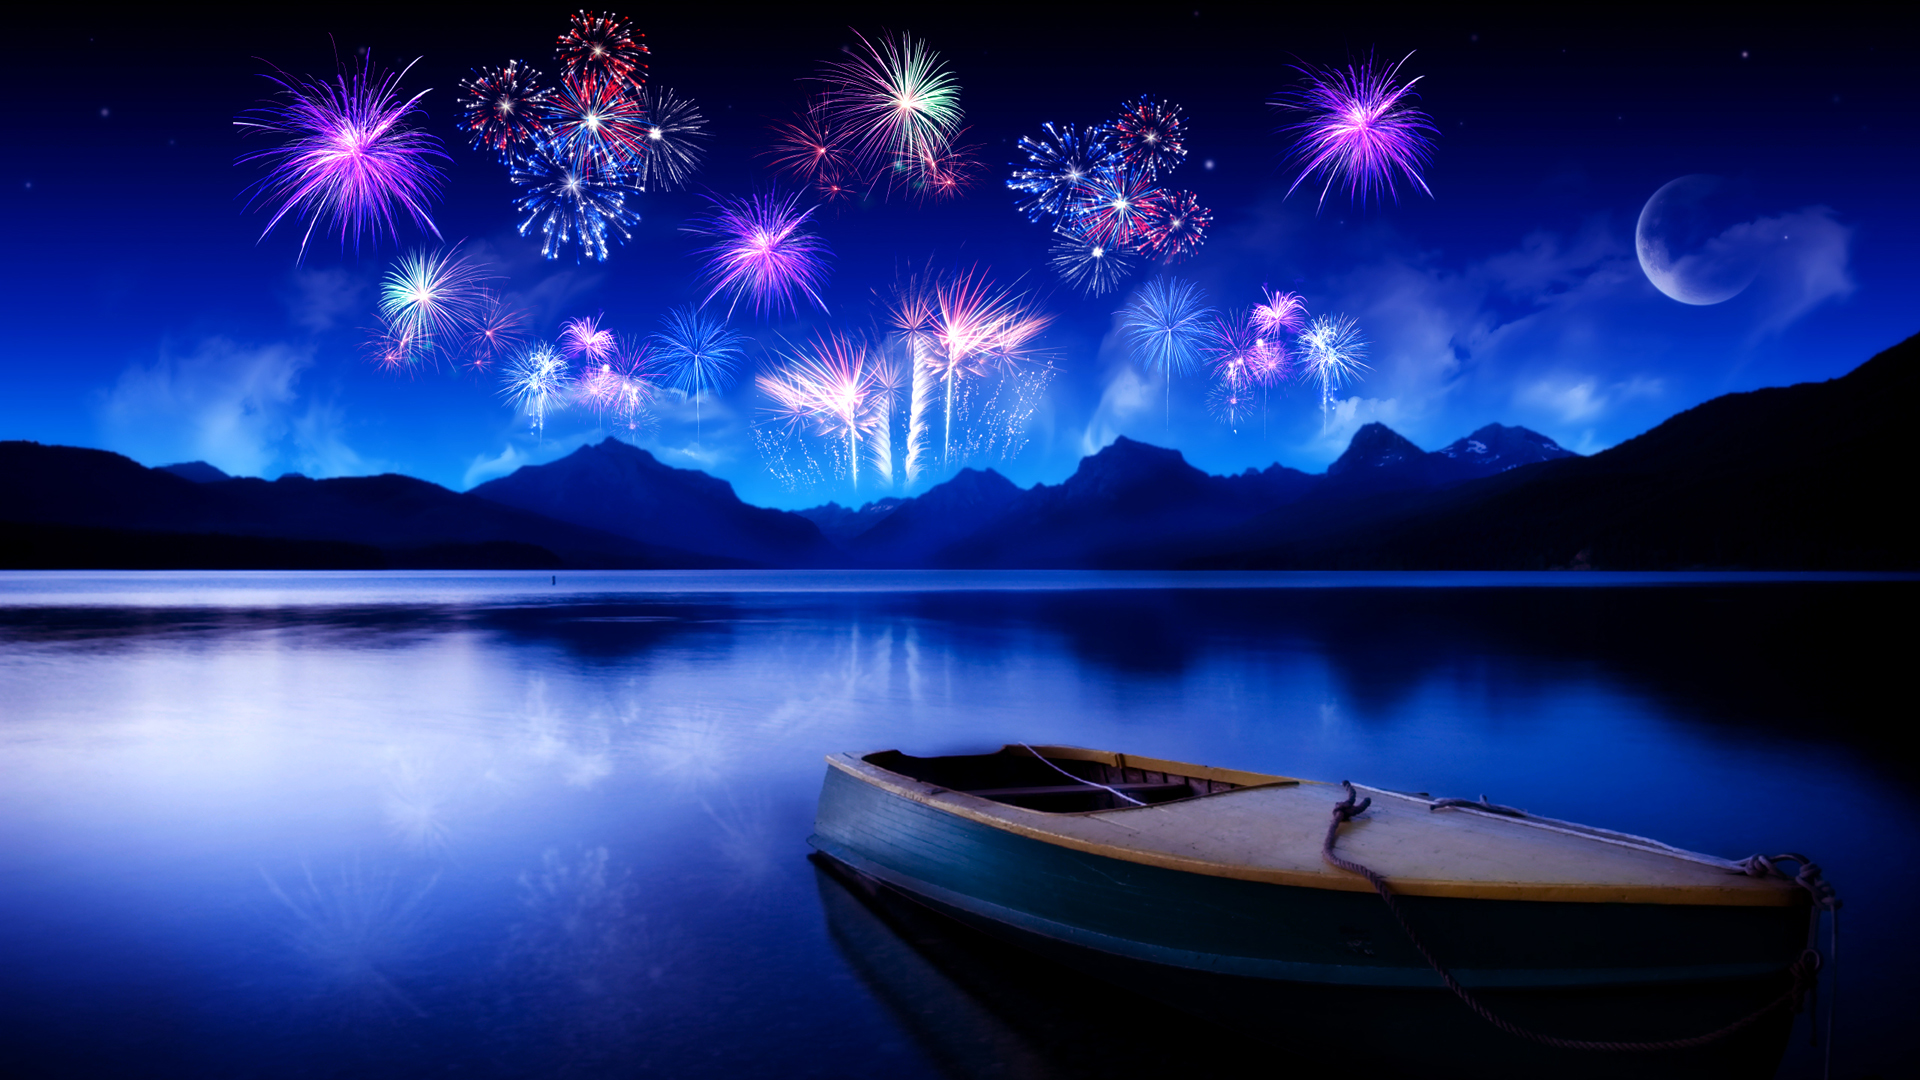 mountains, Moon, fireworks, ships, vehicles, lakes - desktop wallpaper